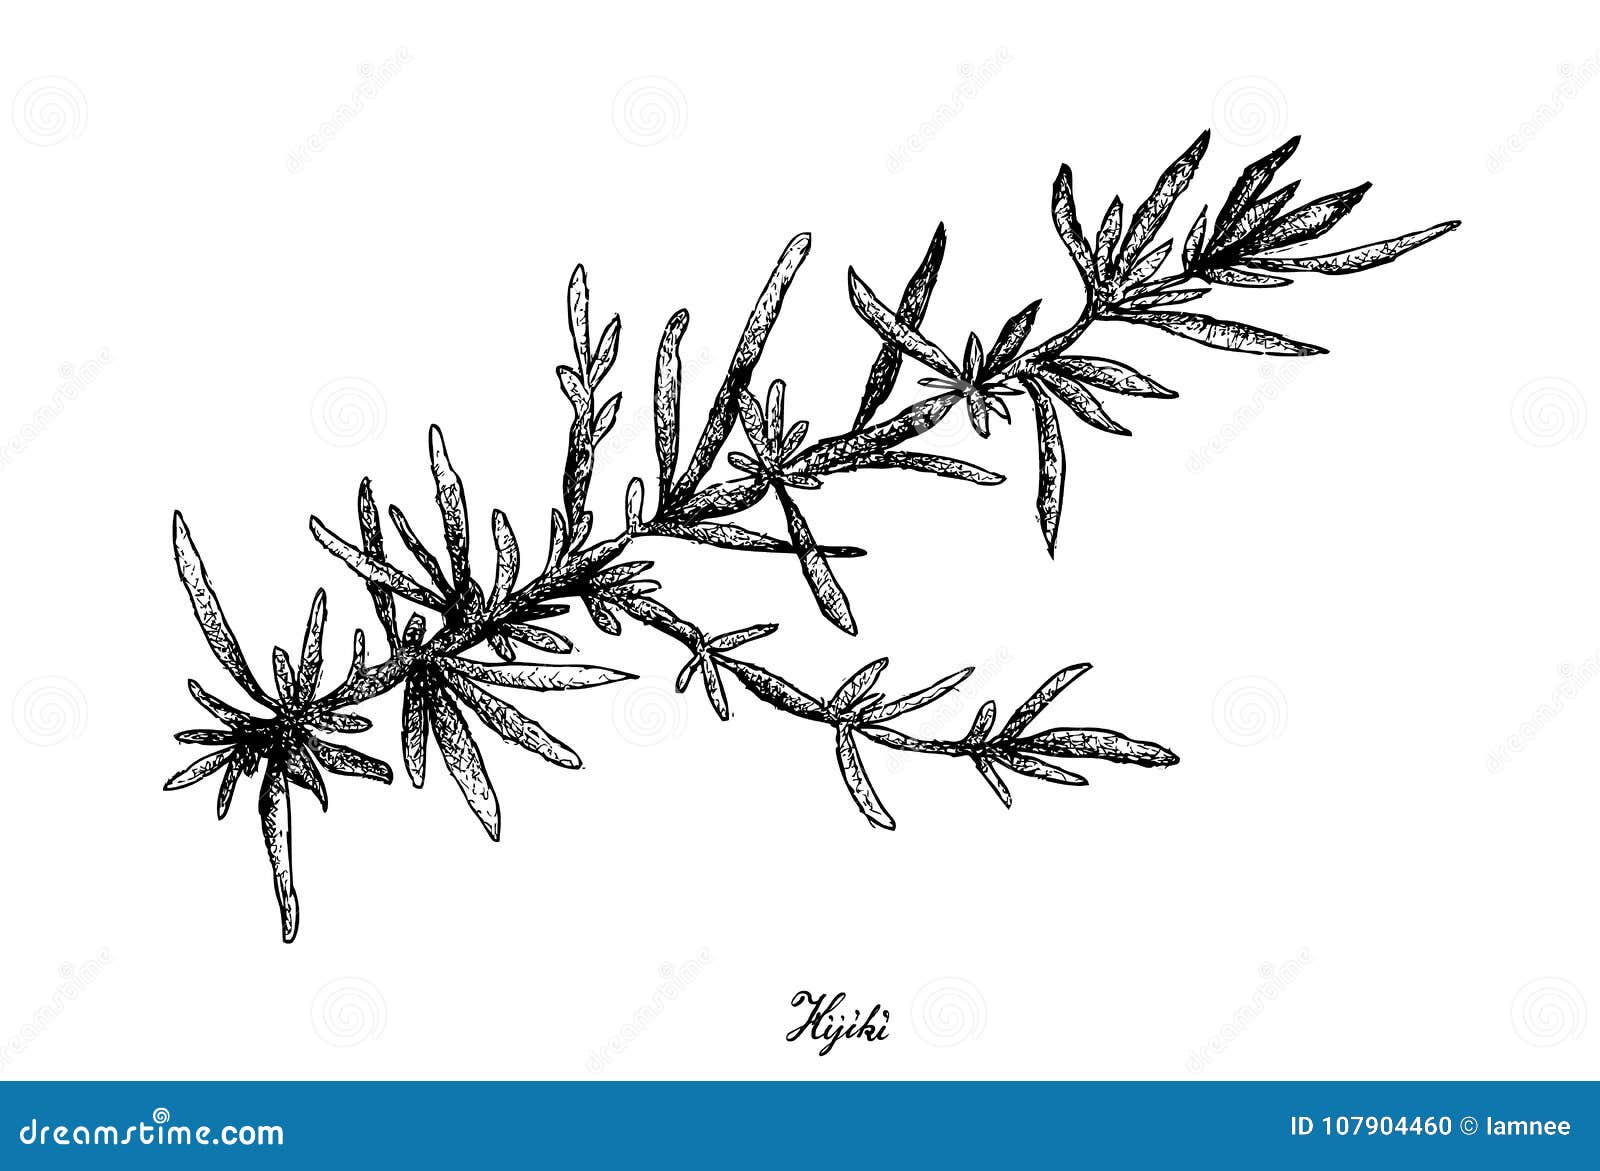 hand drawn of hijiki seaweed on white background